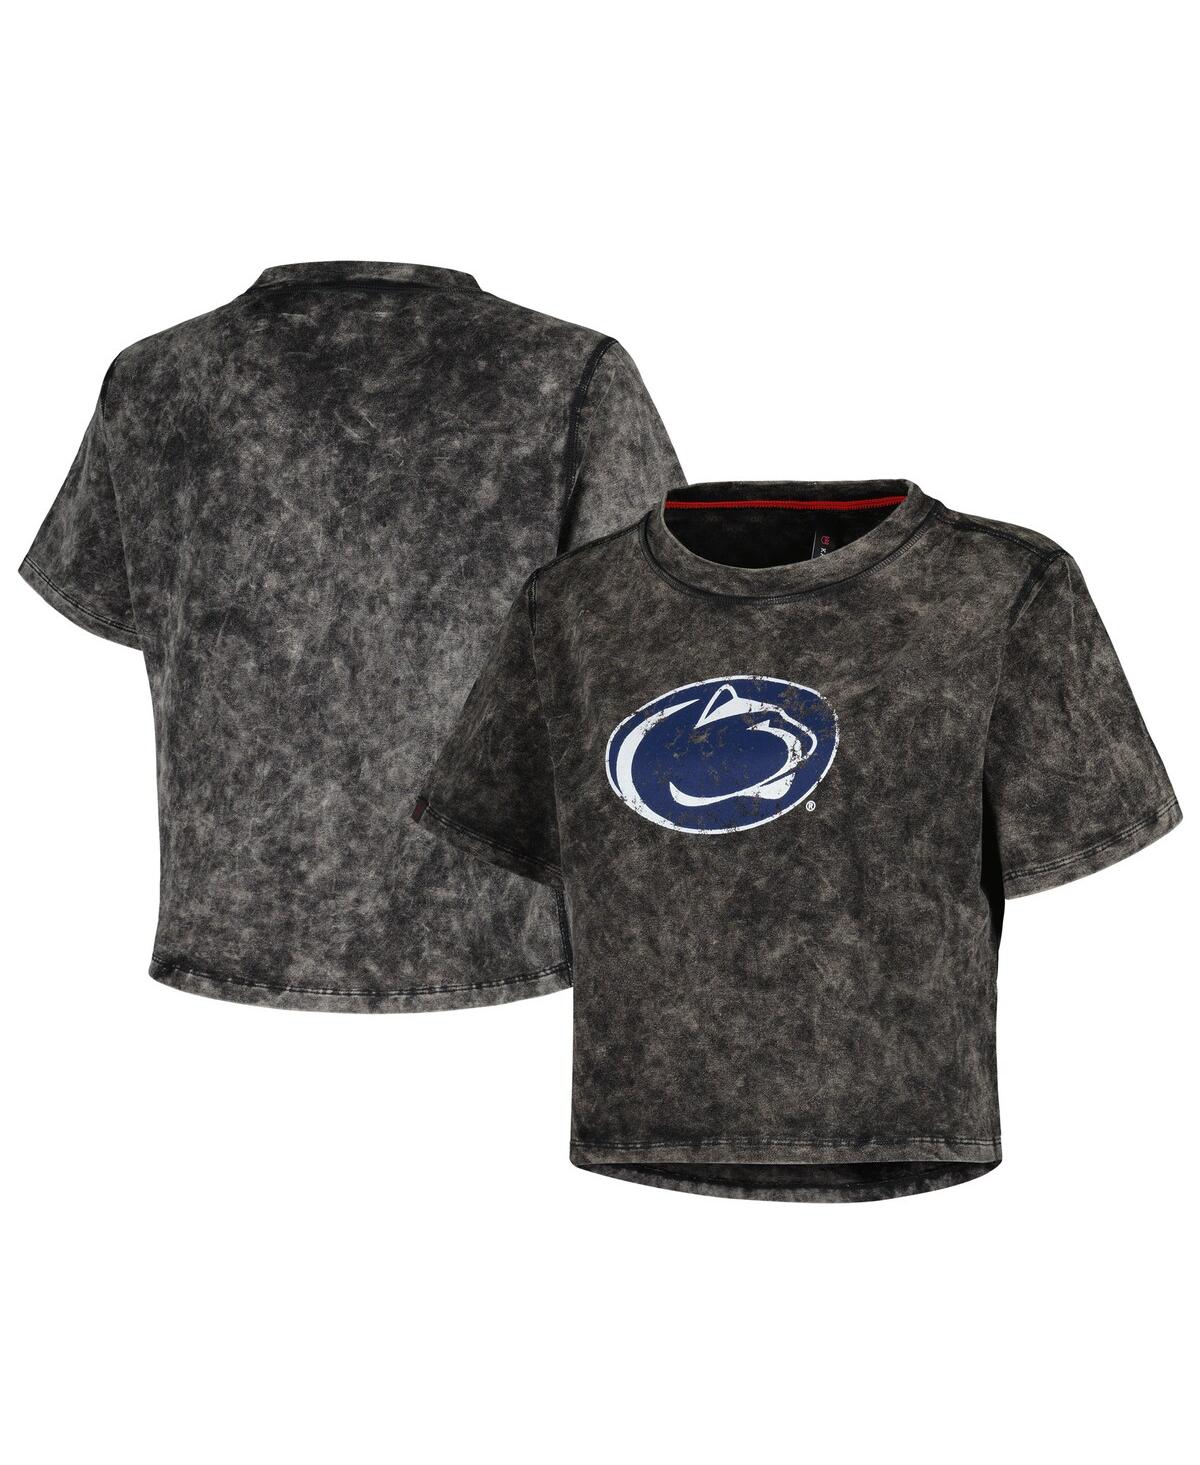 Kadyluxe Women's Black Penn State Nittany Lions Vintage-like Wash Milky Silk Cropped T-shirt